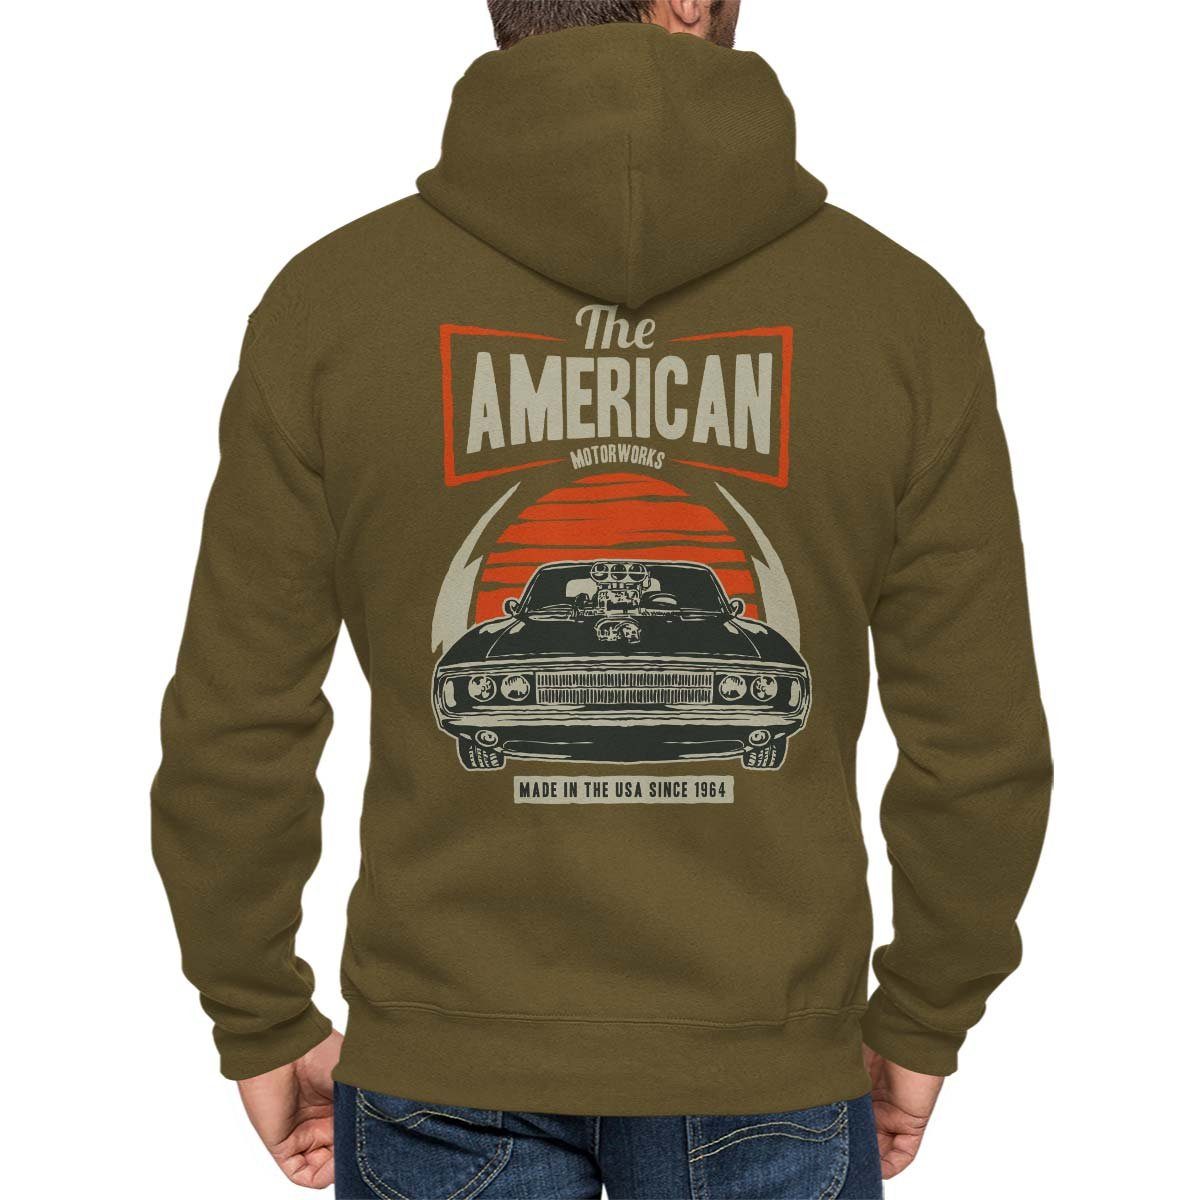 Rebel On Wheels Kapuzensweatjacke Kapuzenjacke Zip Hoodie The American mit Auto / US-Car Motiv Khaki